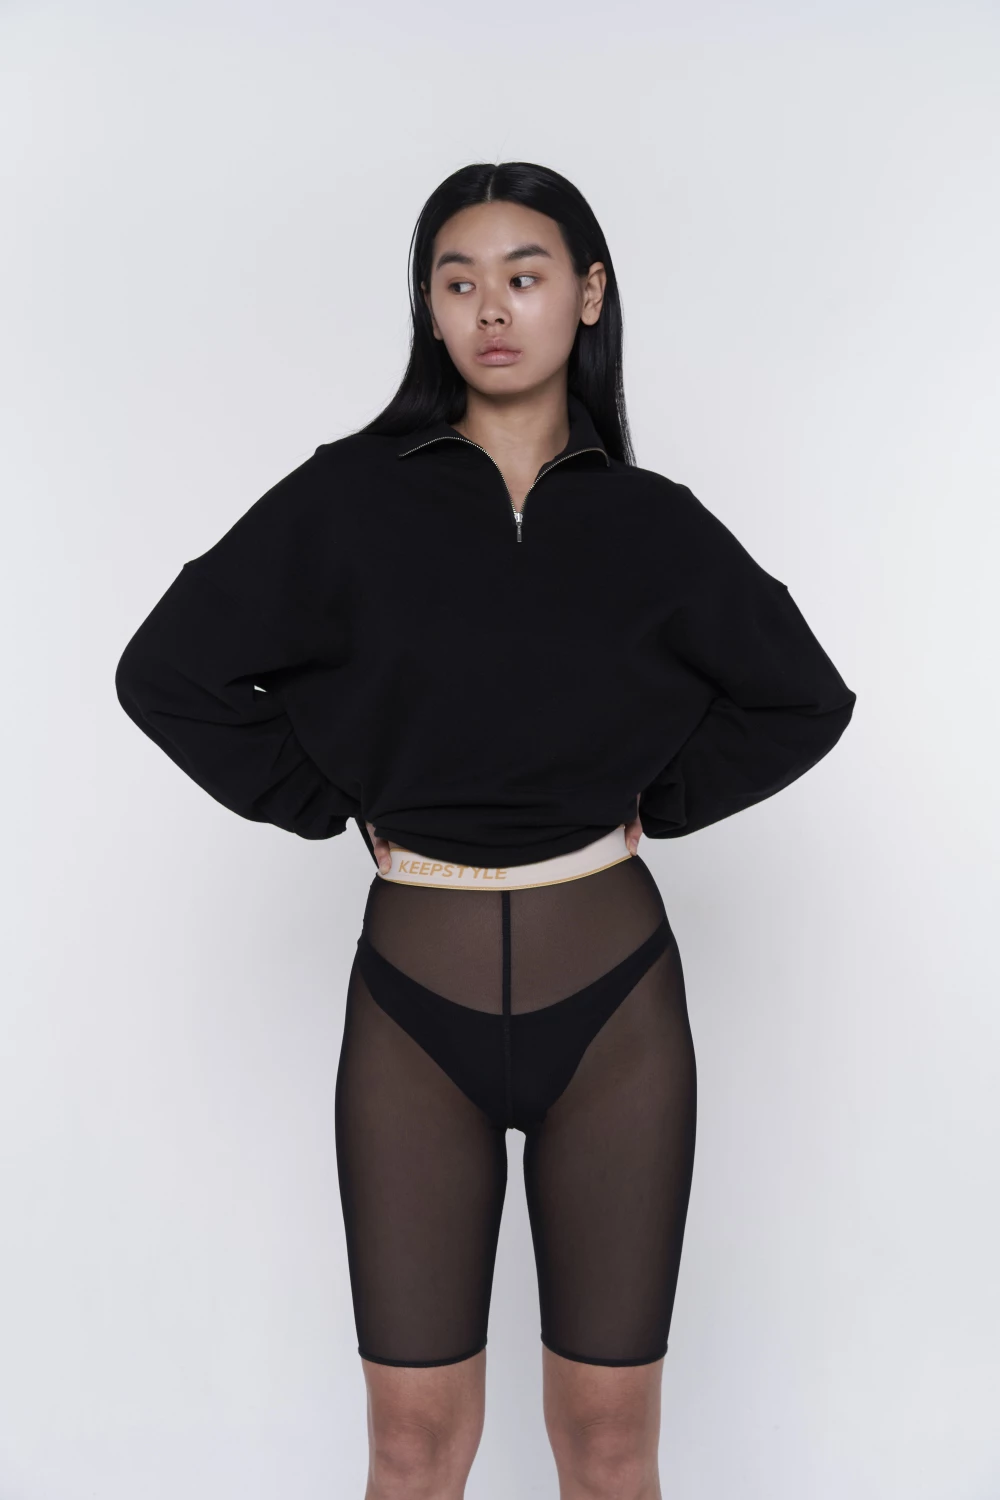 legging shorts mesh in black color